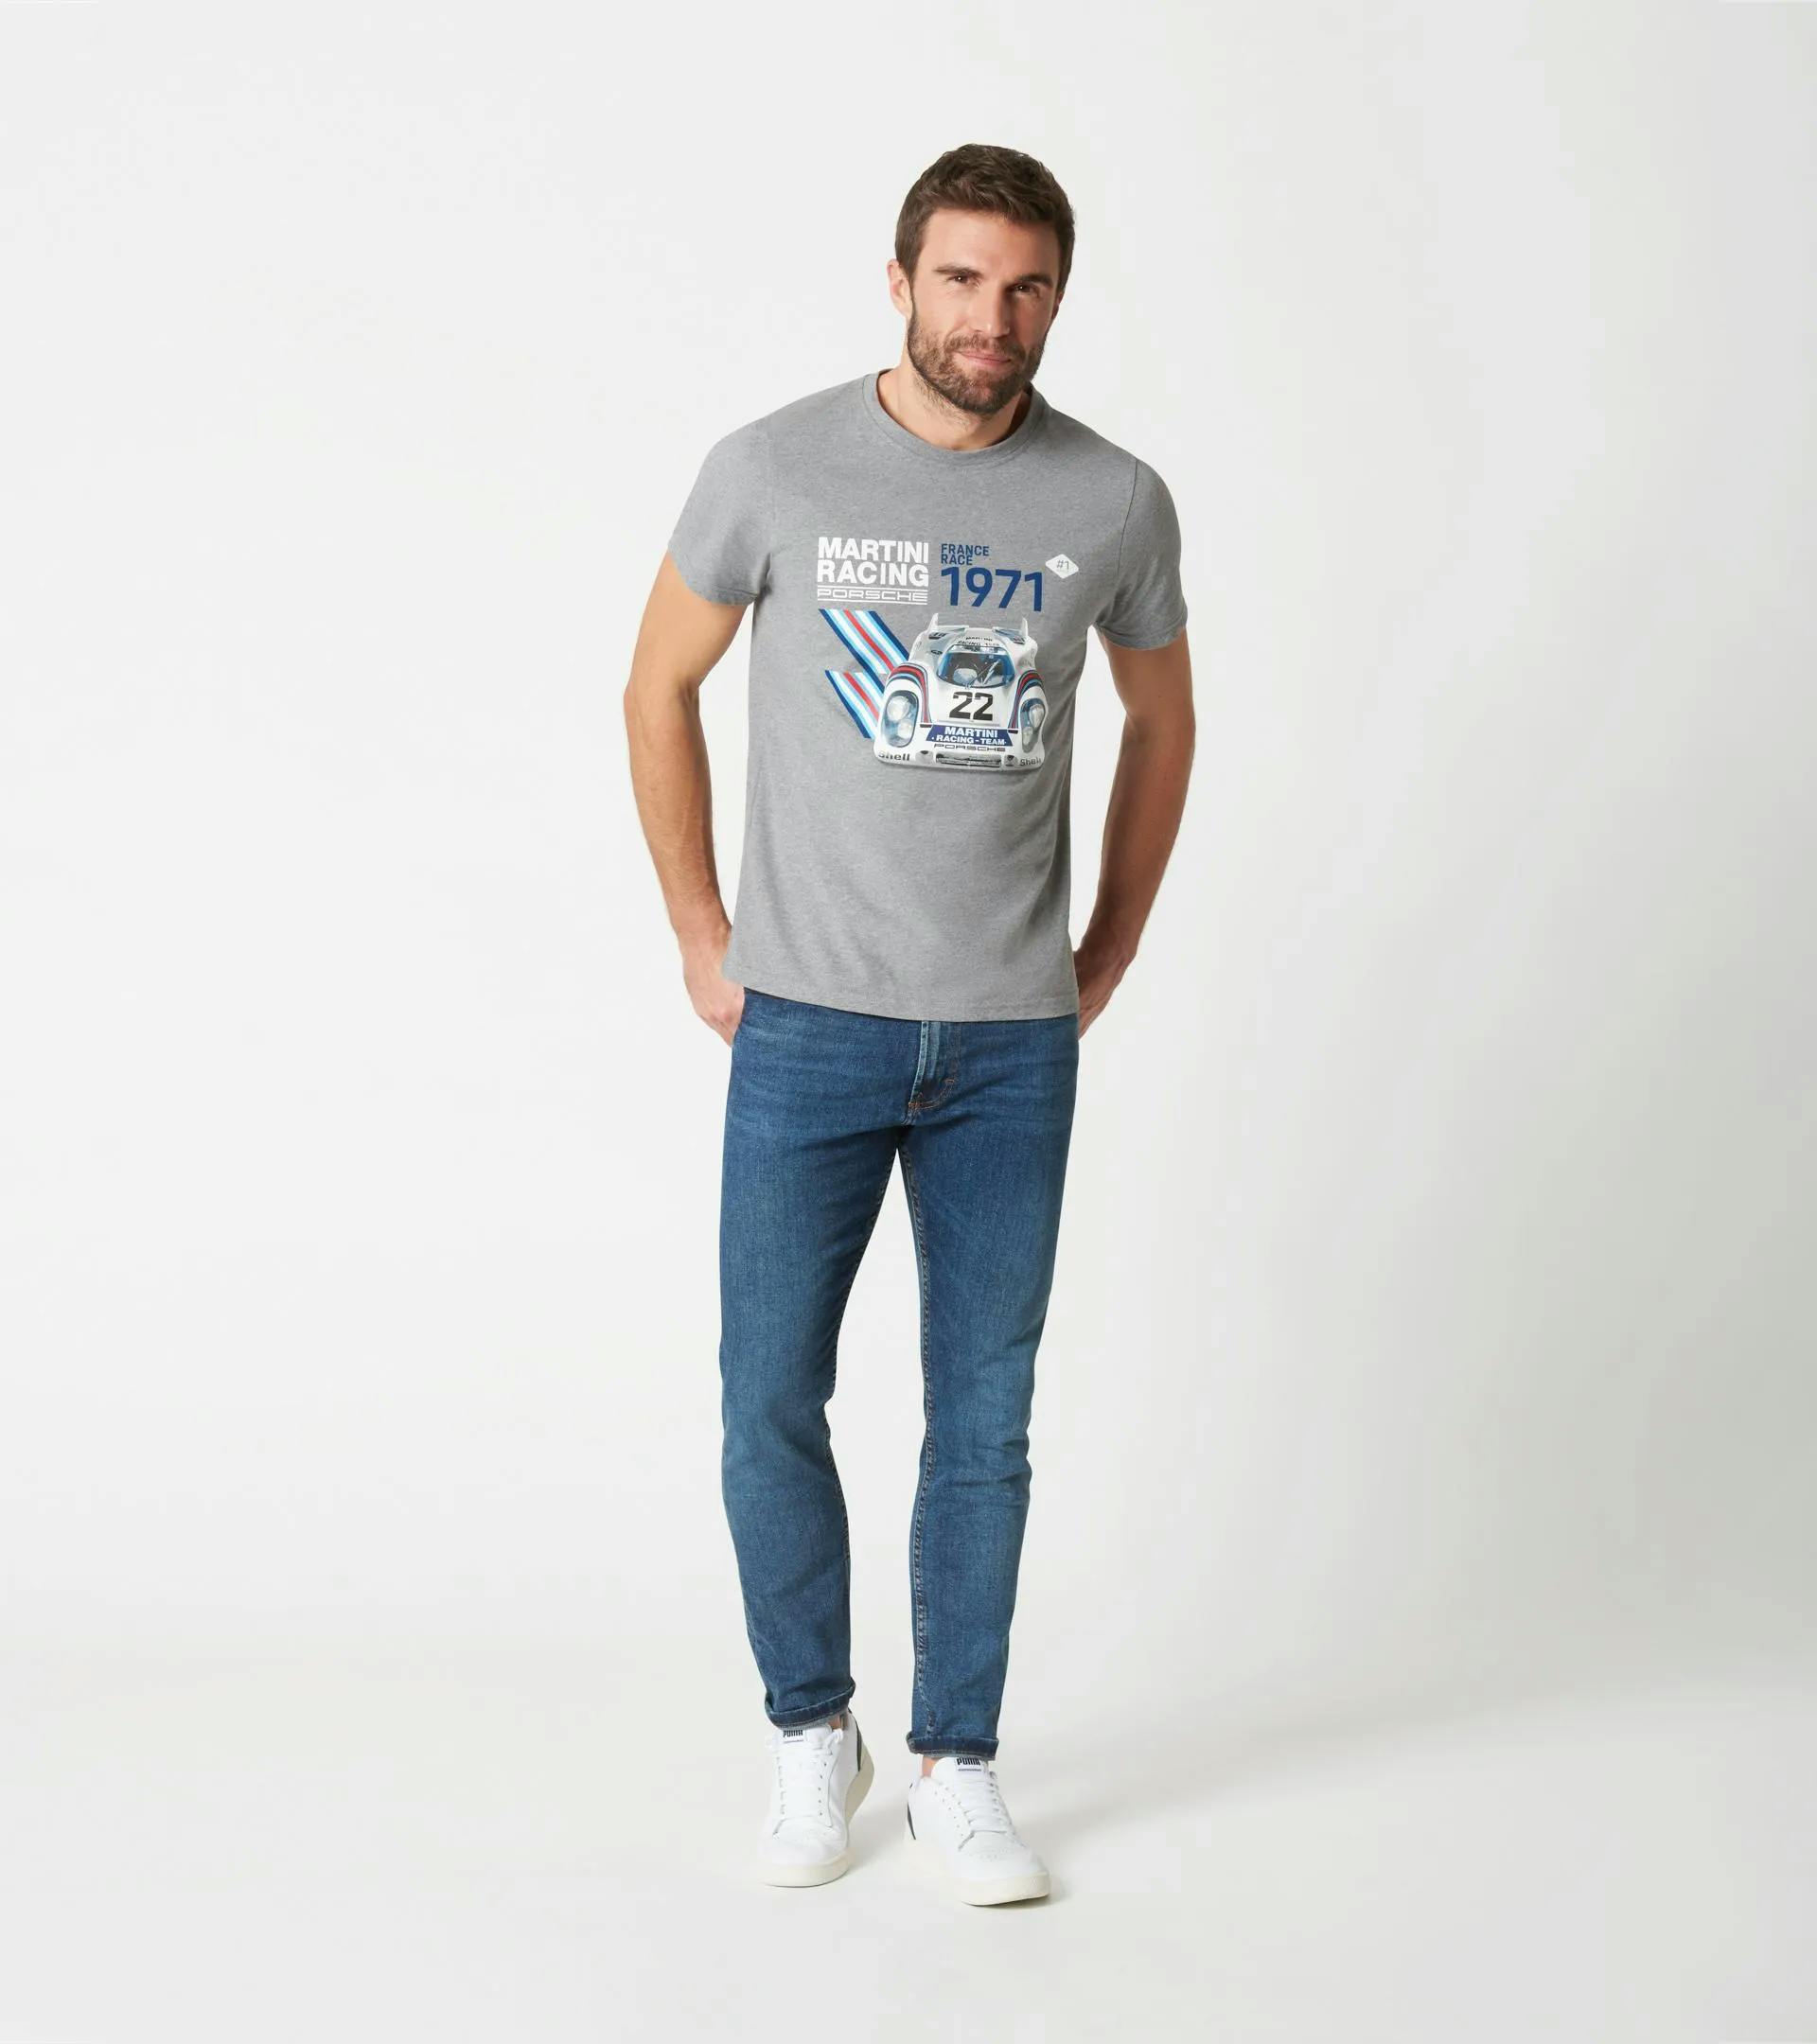 Collector's T-Shirt No. 20 unisex – MARTINI RACING® – Ltd. 5